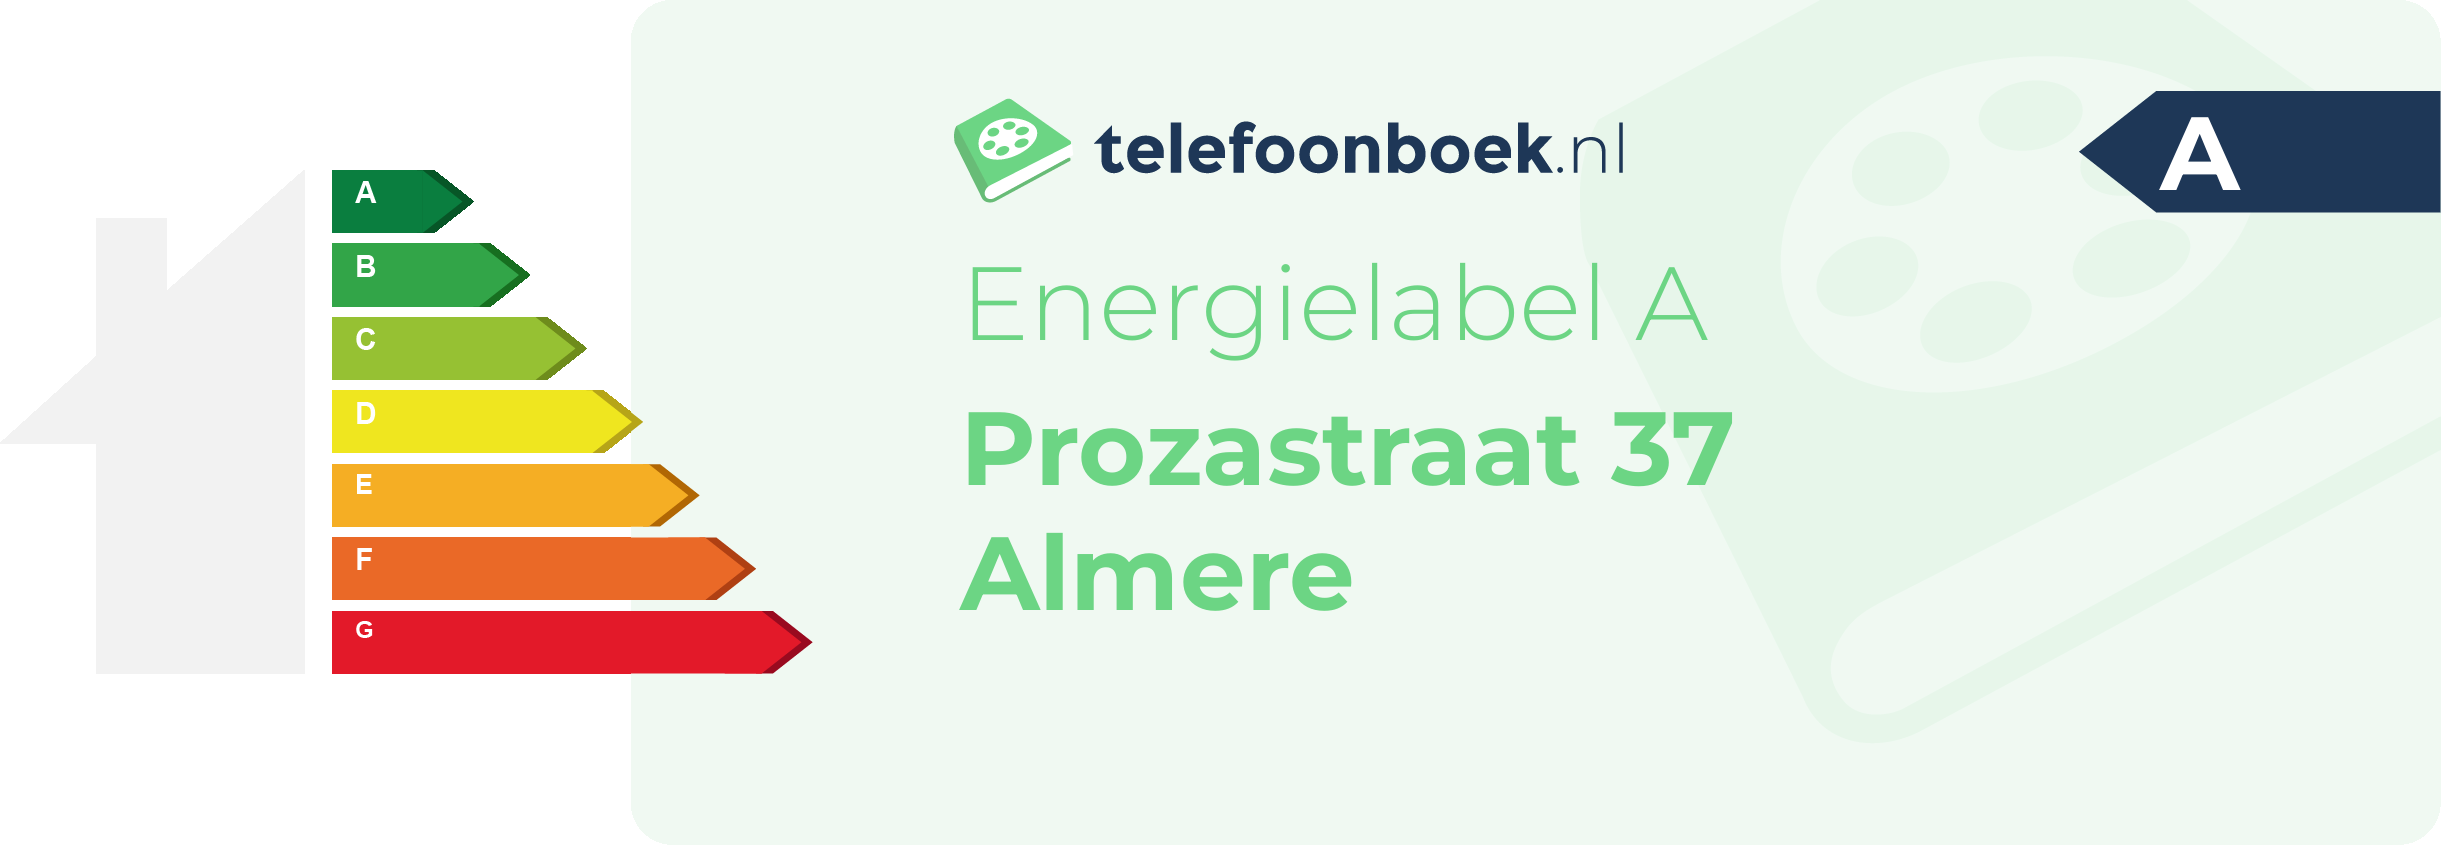 Energielabel Prozastraat 37 Almere